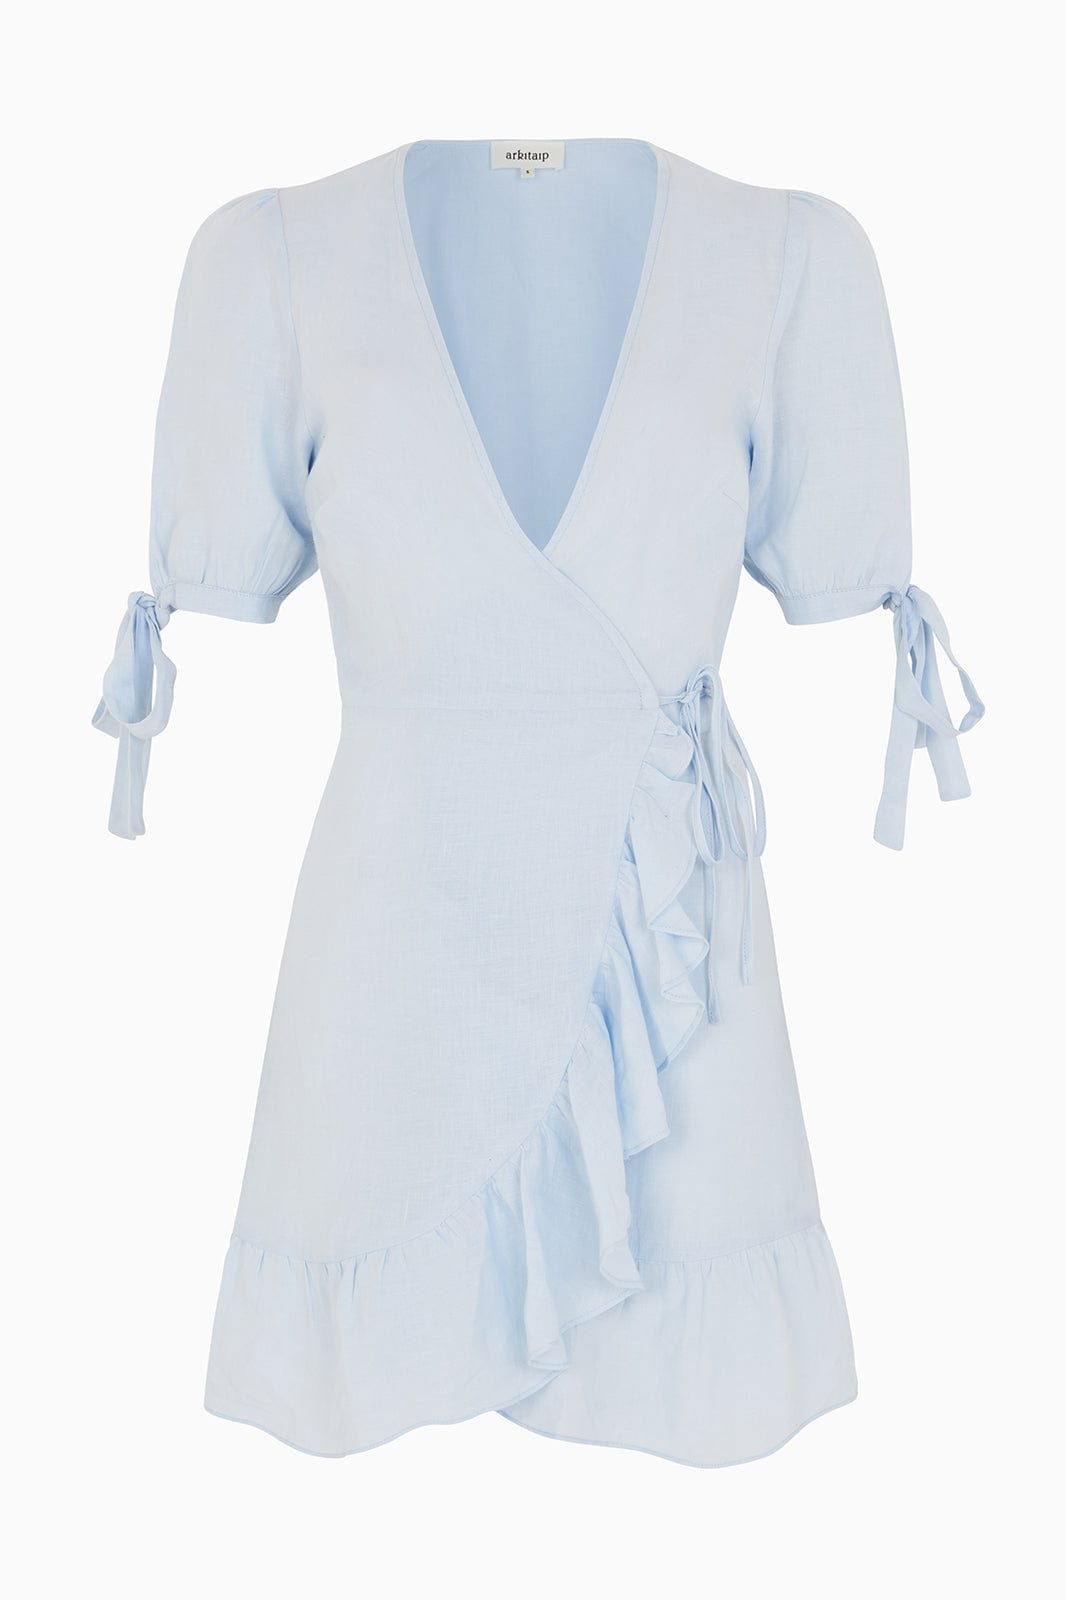 arkitaip Mini Dresses The Catalina Mini Wrap Dress in sky blue